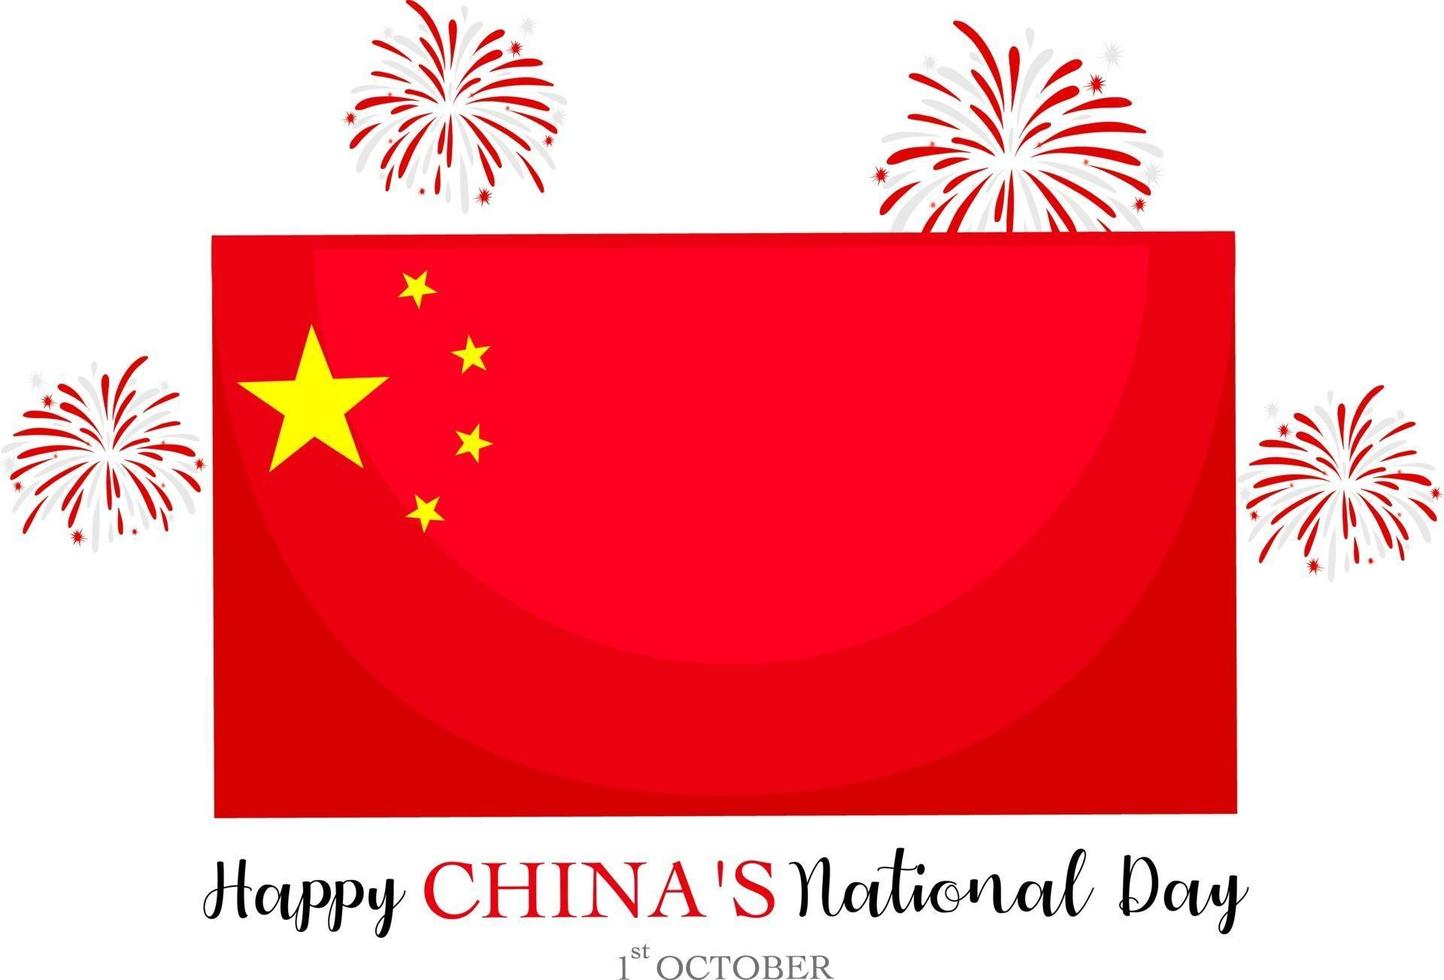 Happy China National Day Banner mit Flagge von China vektor